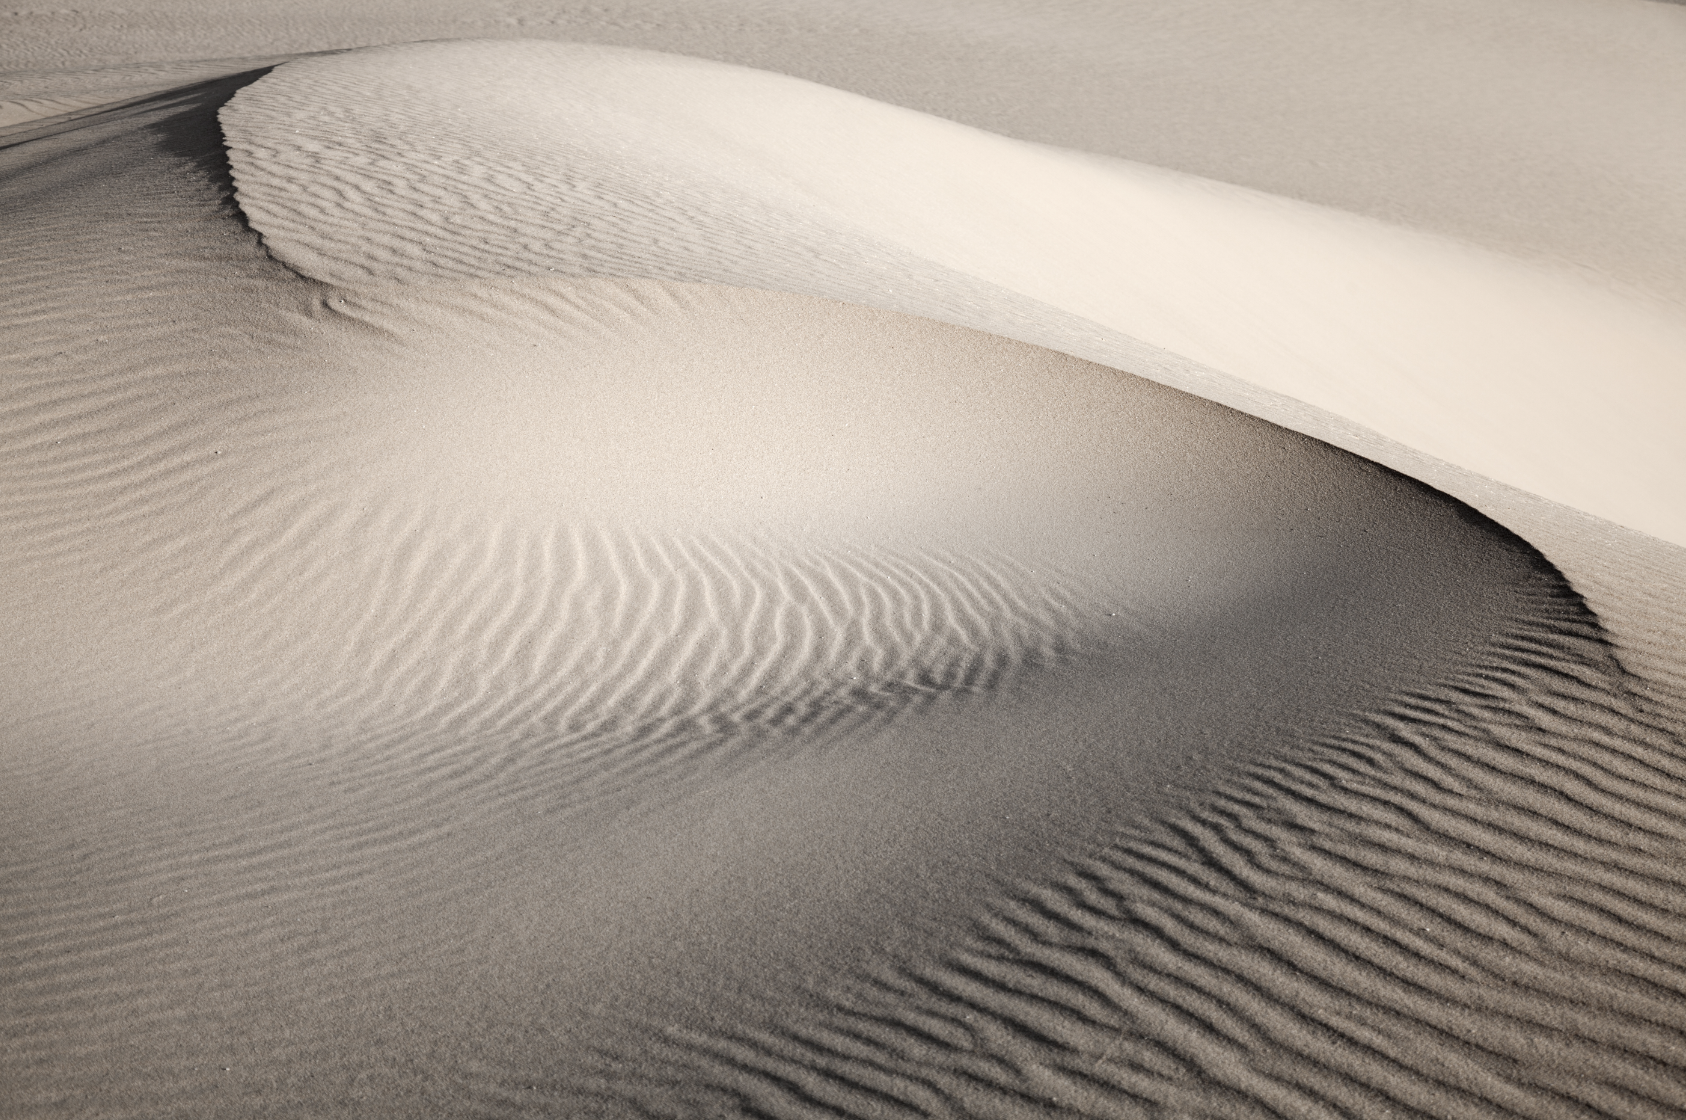 Serene desert landscape showcasing undulating sand dunes with intricate ripple patterns